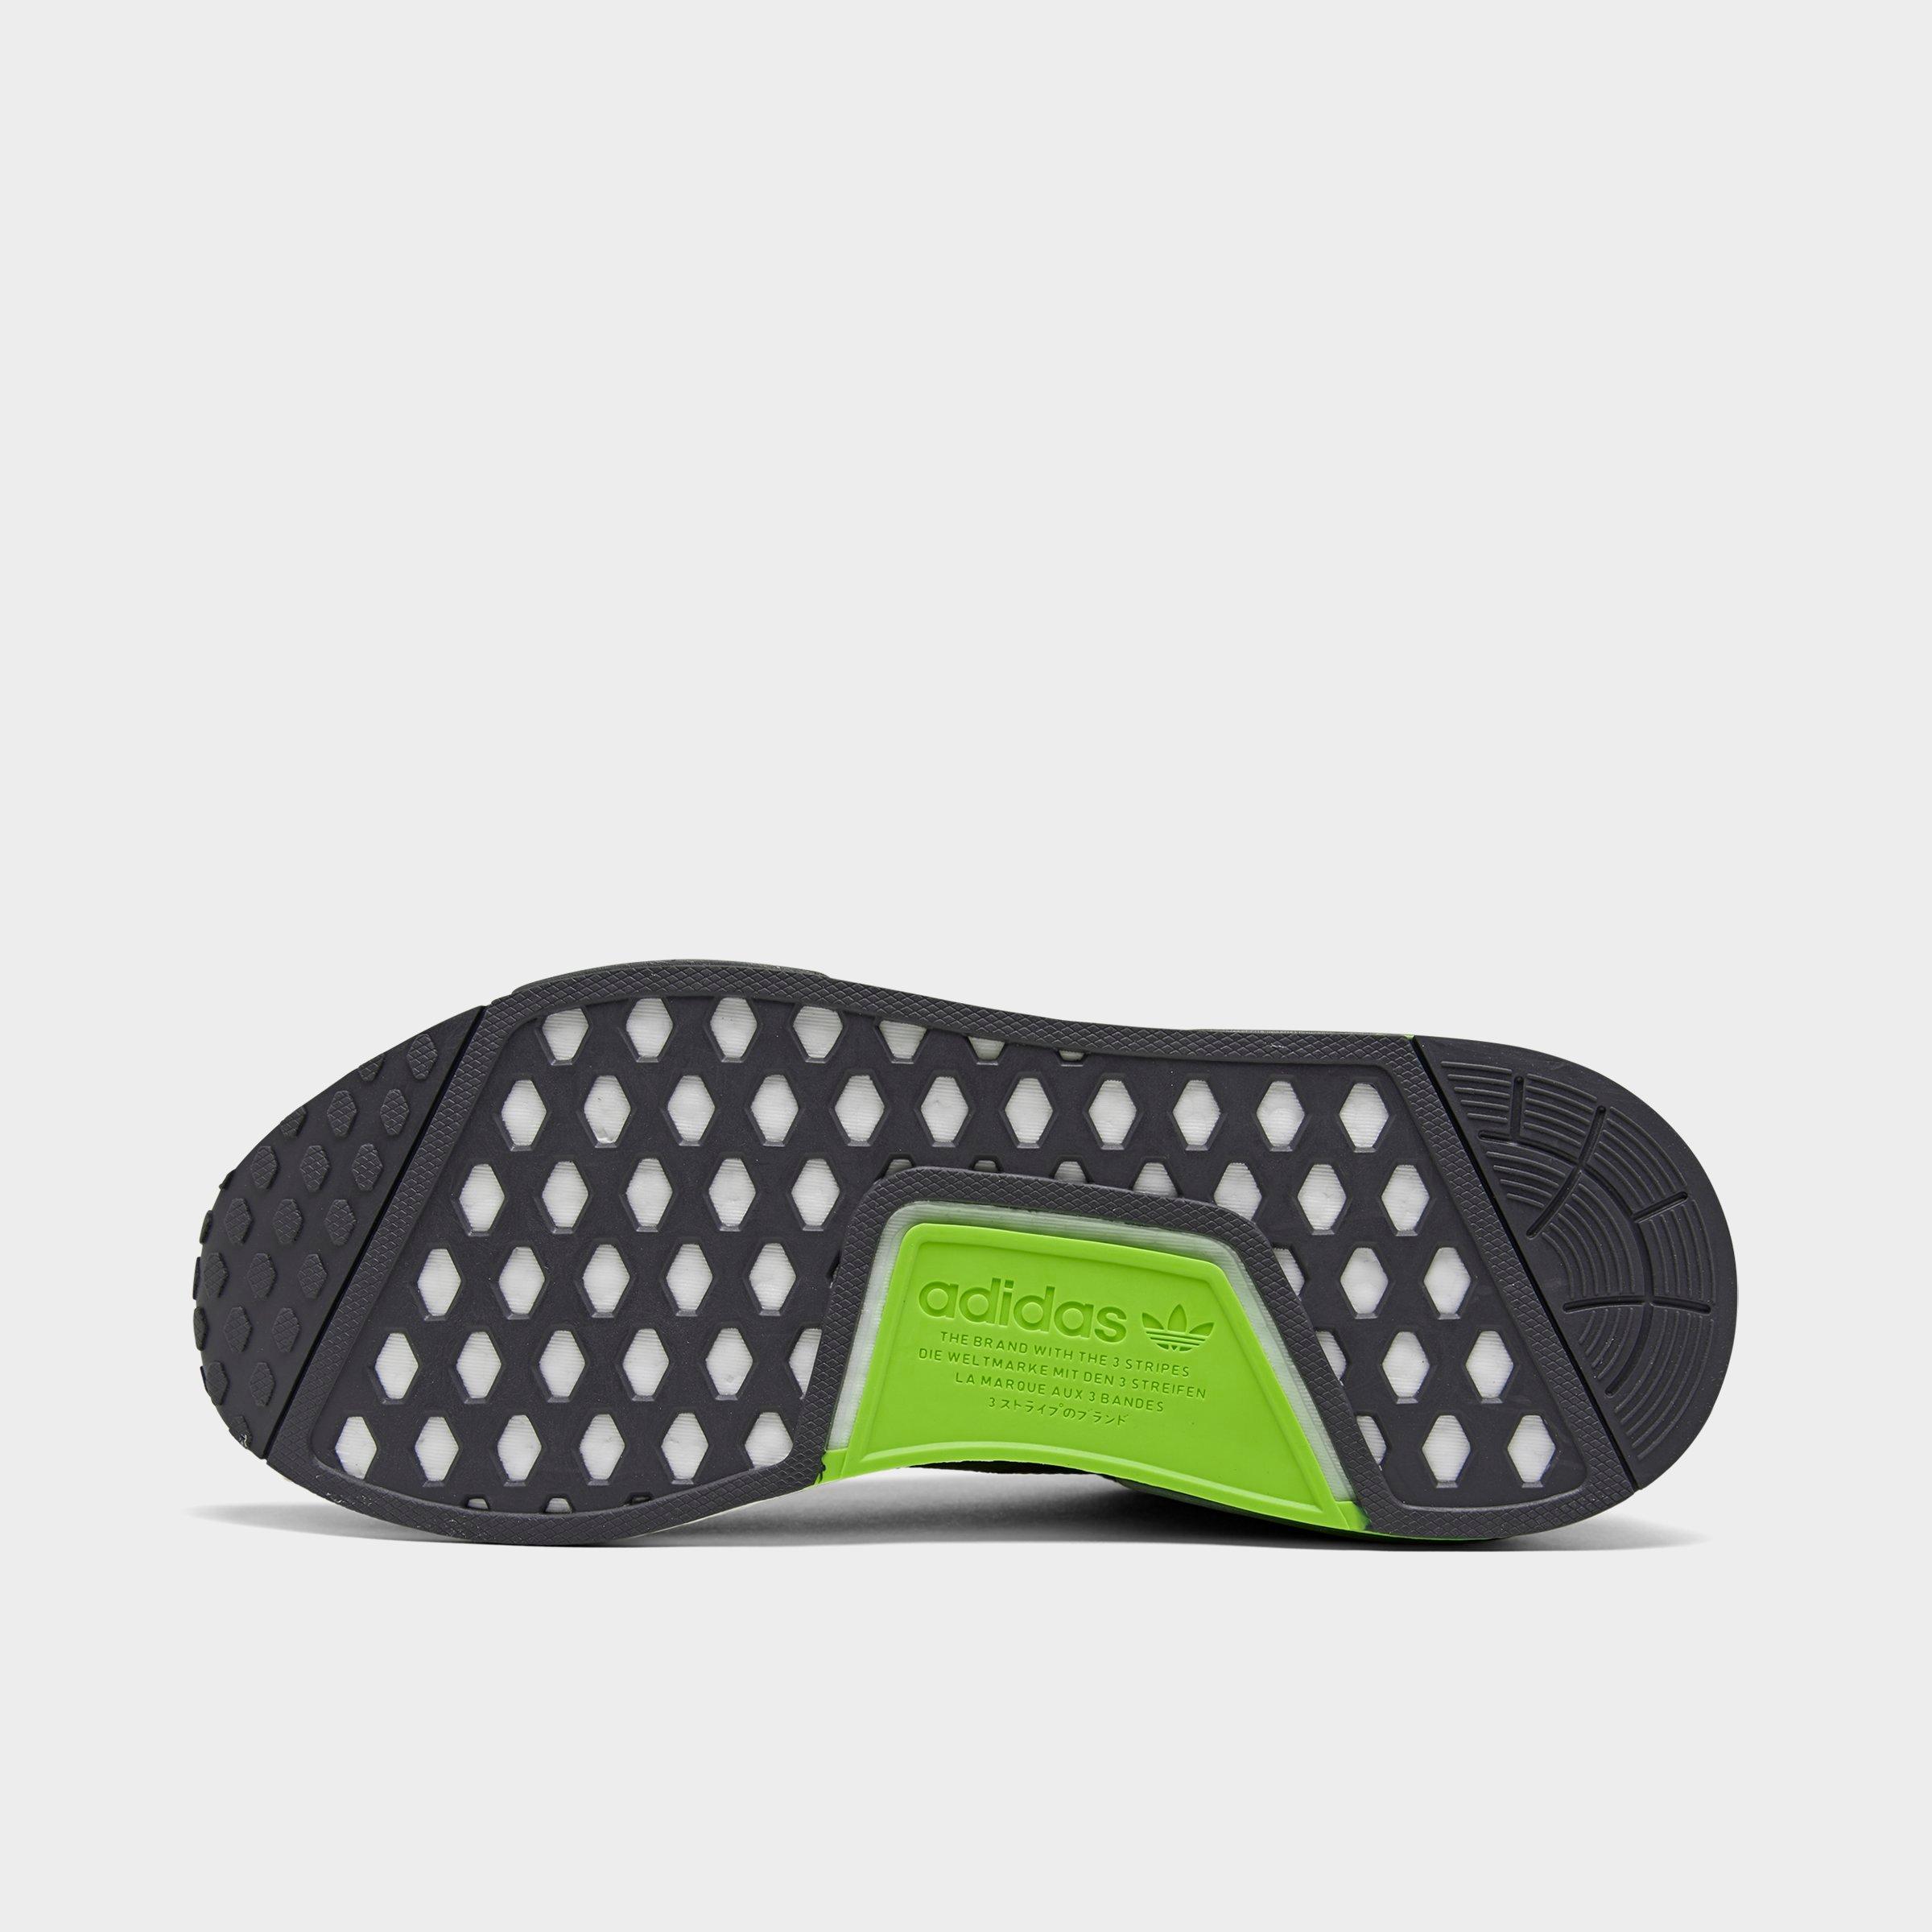 NMD R1 Primeknit Black Gum Bottom sole Adidas Mens Size US 9 for